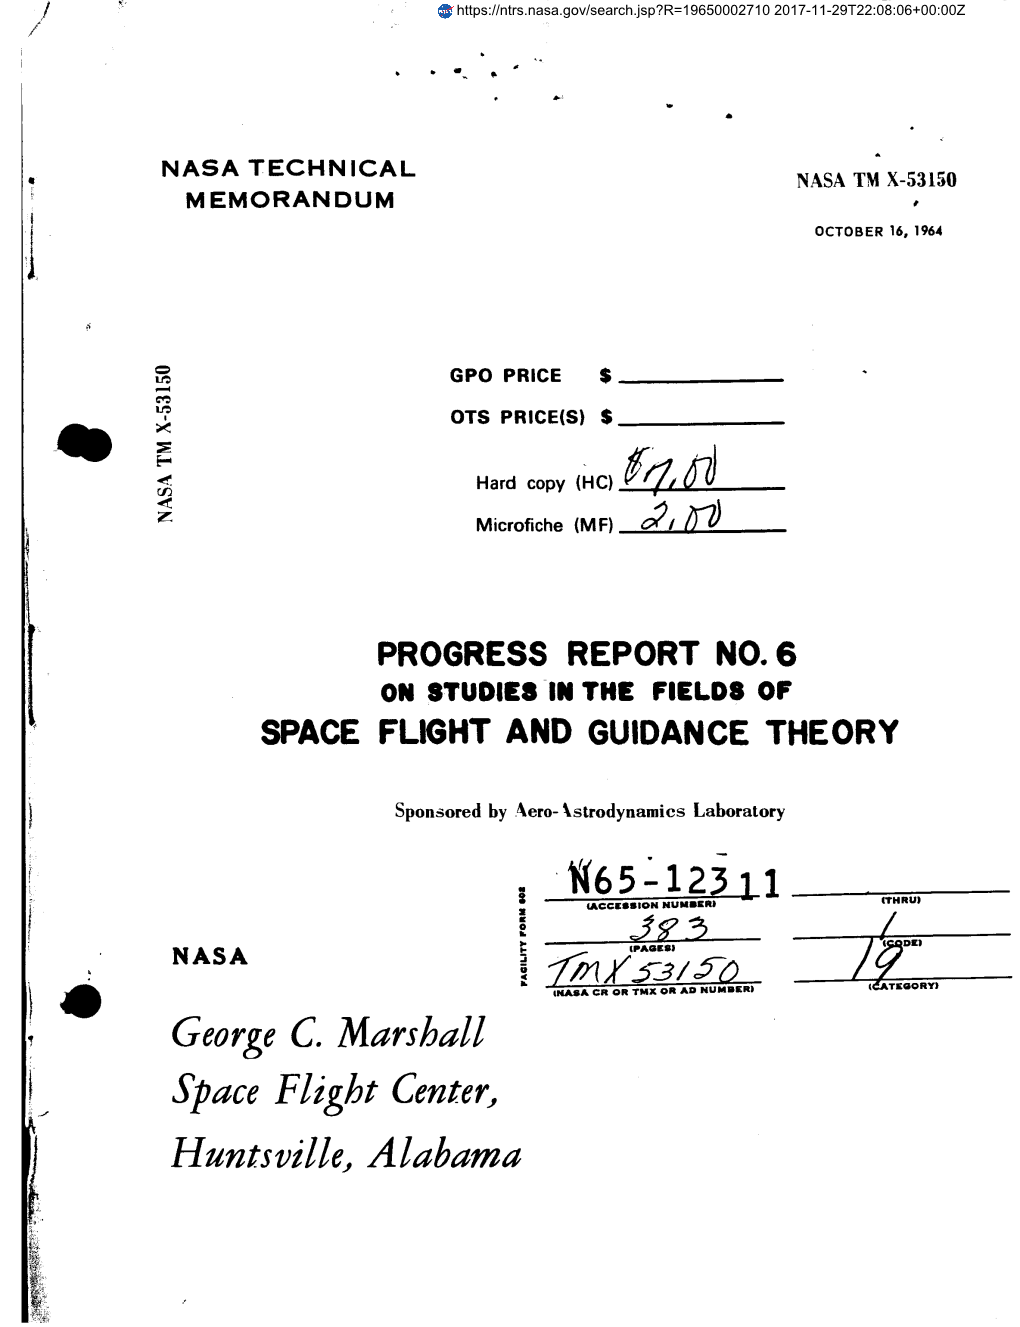 George C. Marshall Space Flight Center, Huntsville, Alabama NASA-GEORGE C